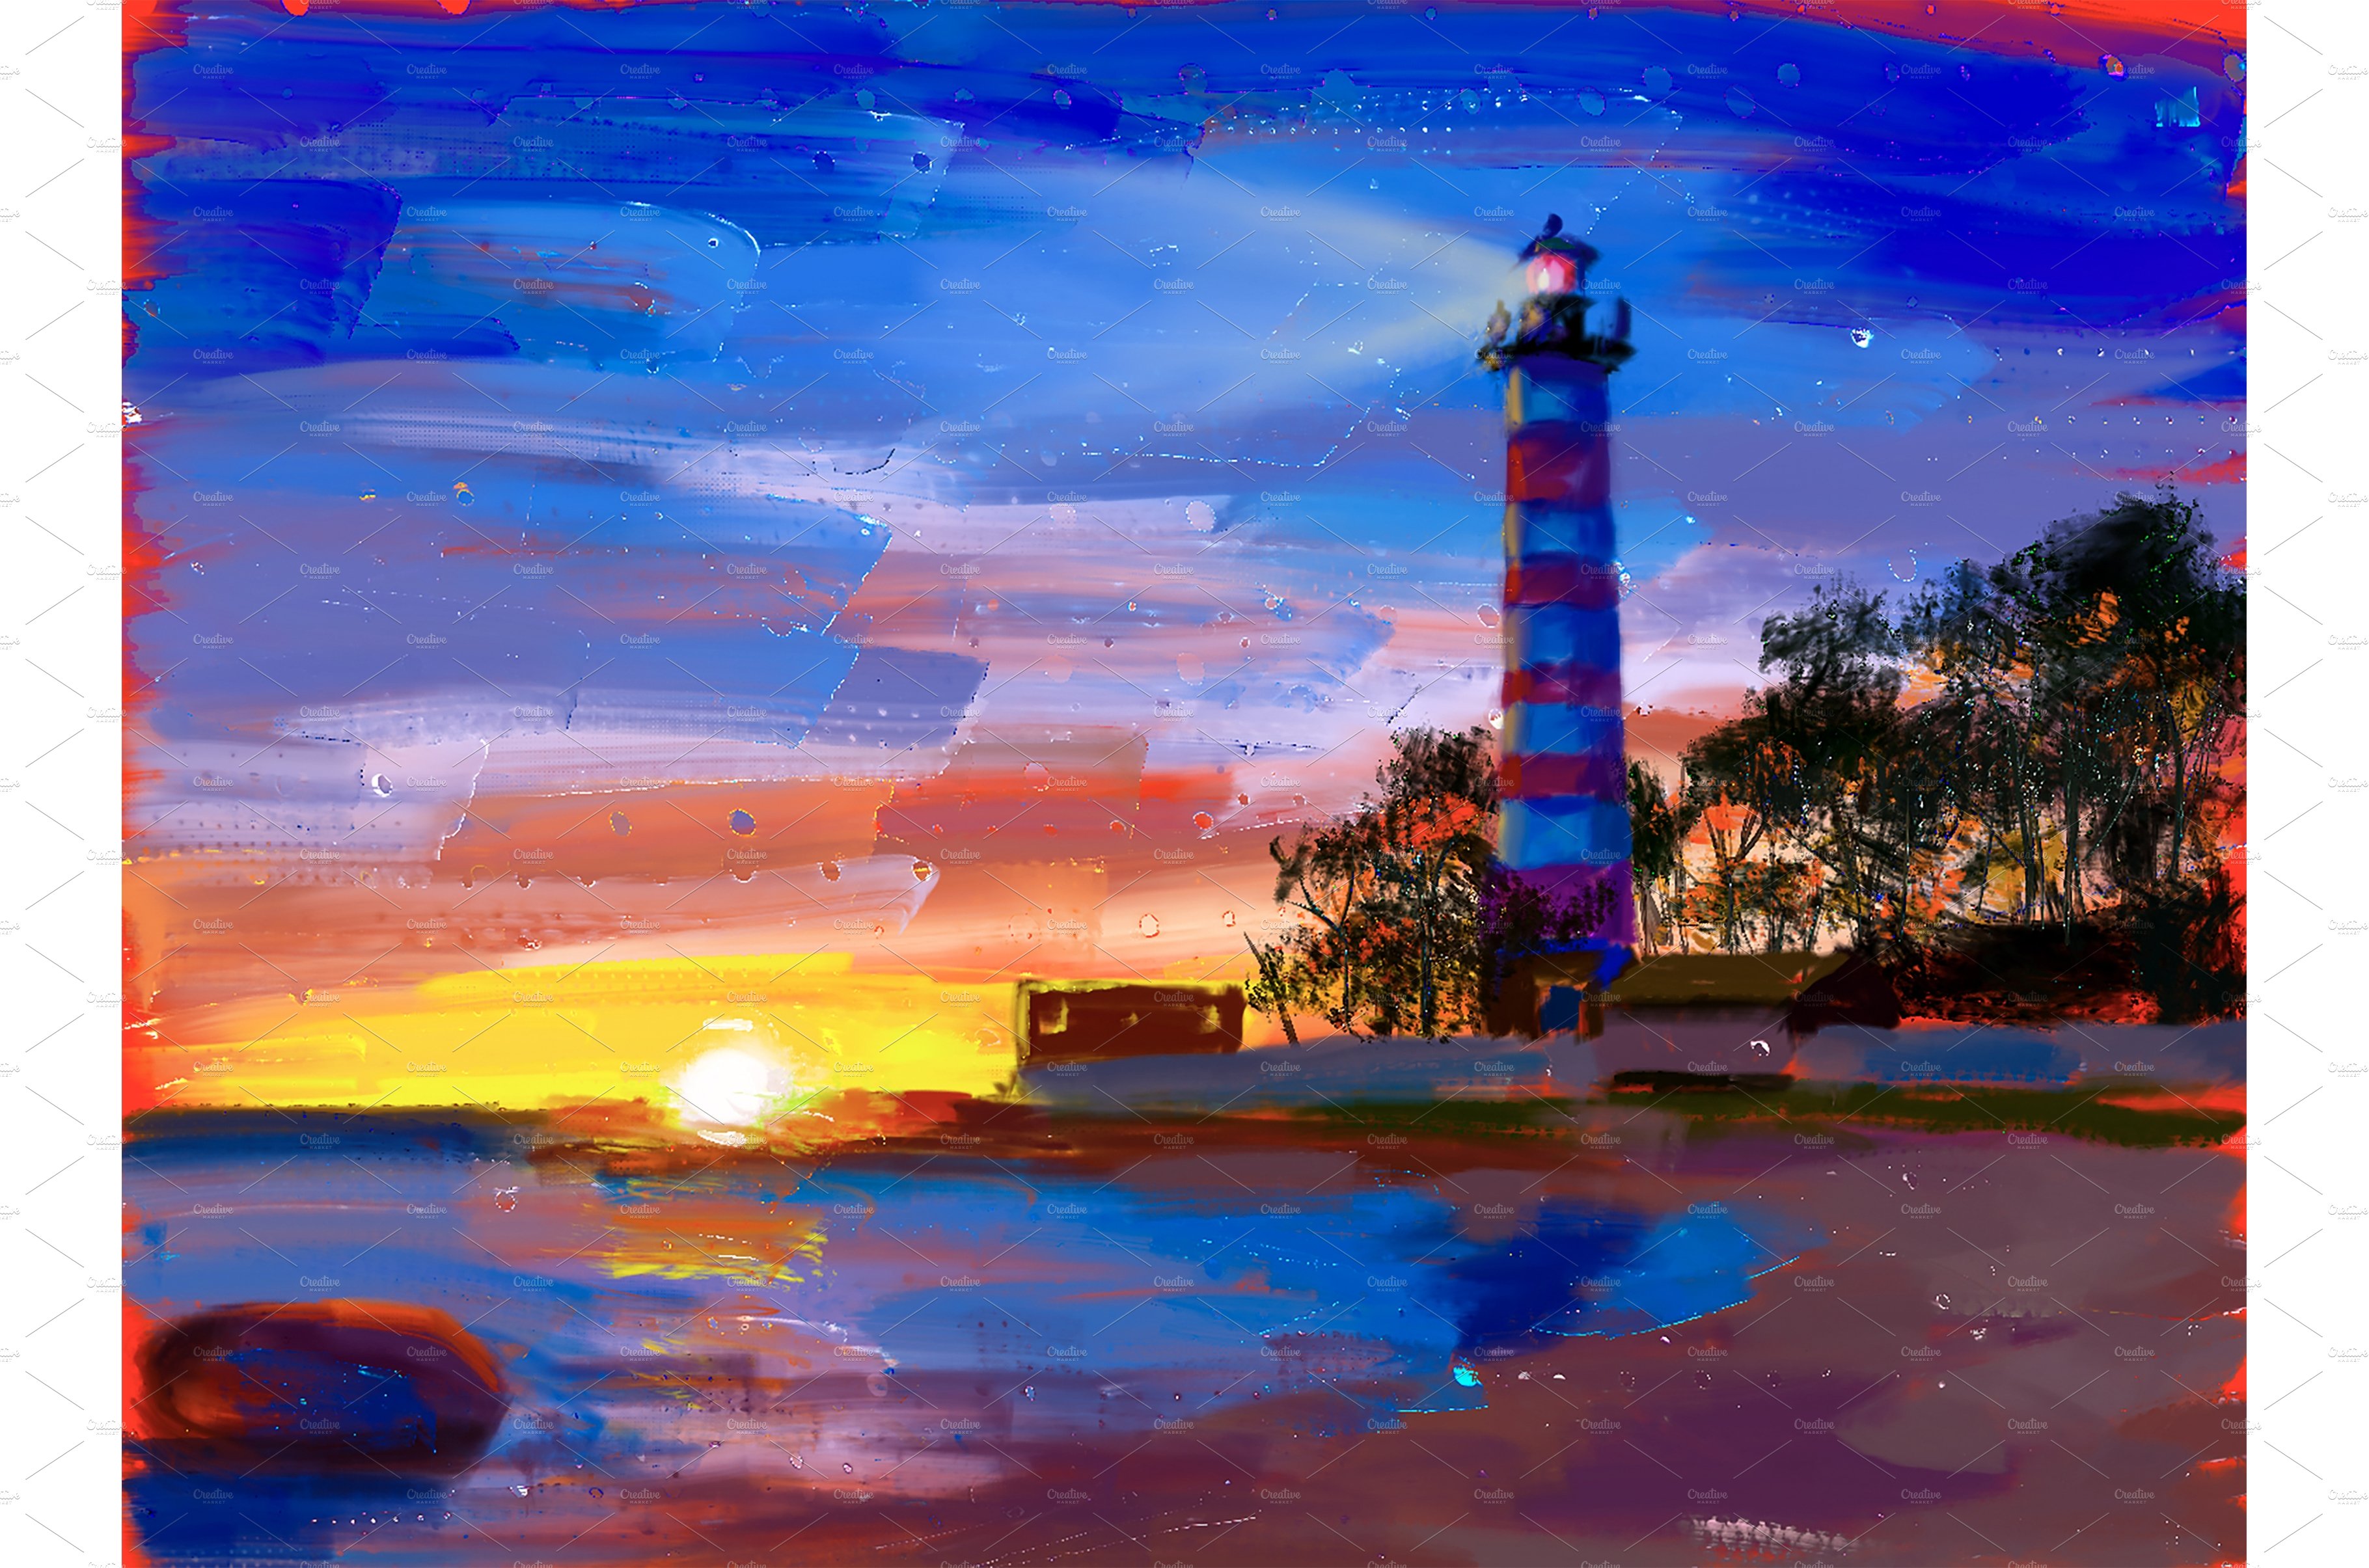 Lighthouse sea at sunset landscape cover image.